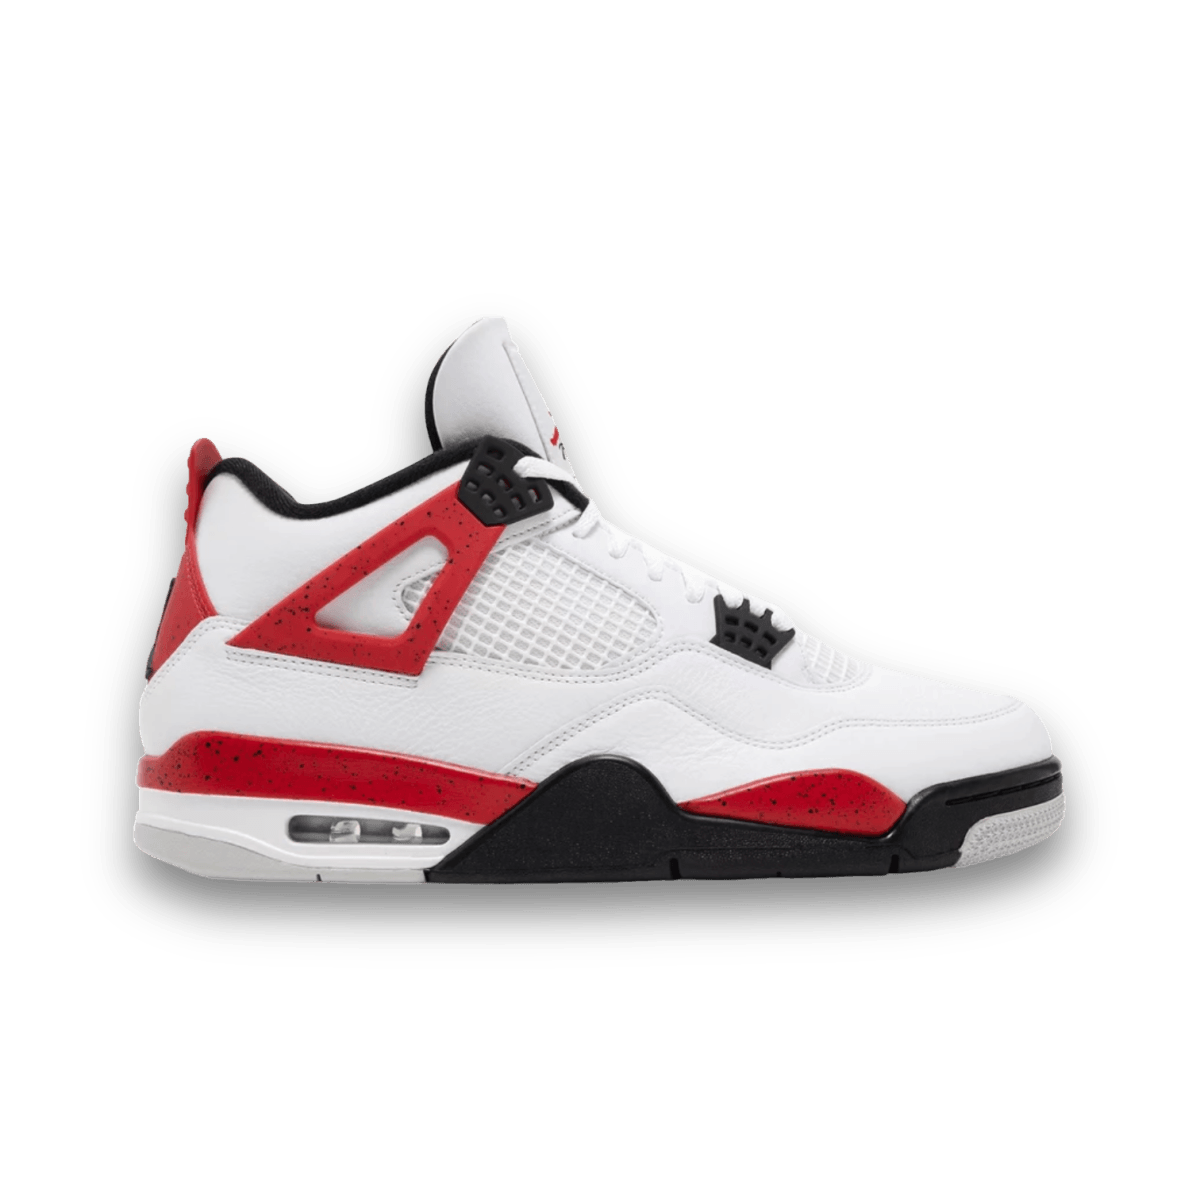 Air Jordan 4 Retro 'Red Cement' - Pre School - Mid Sneaker - Jawns on Fire Sneakers & Streetwear